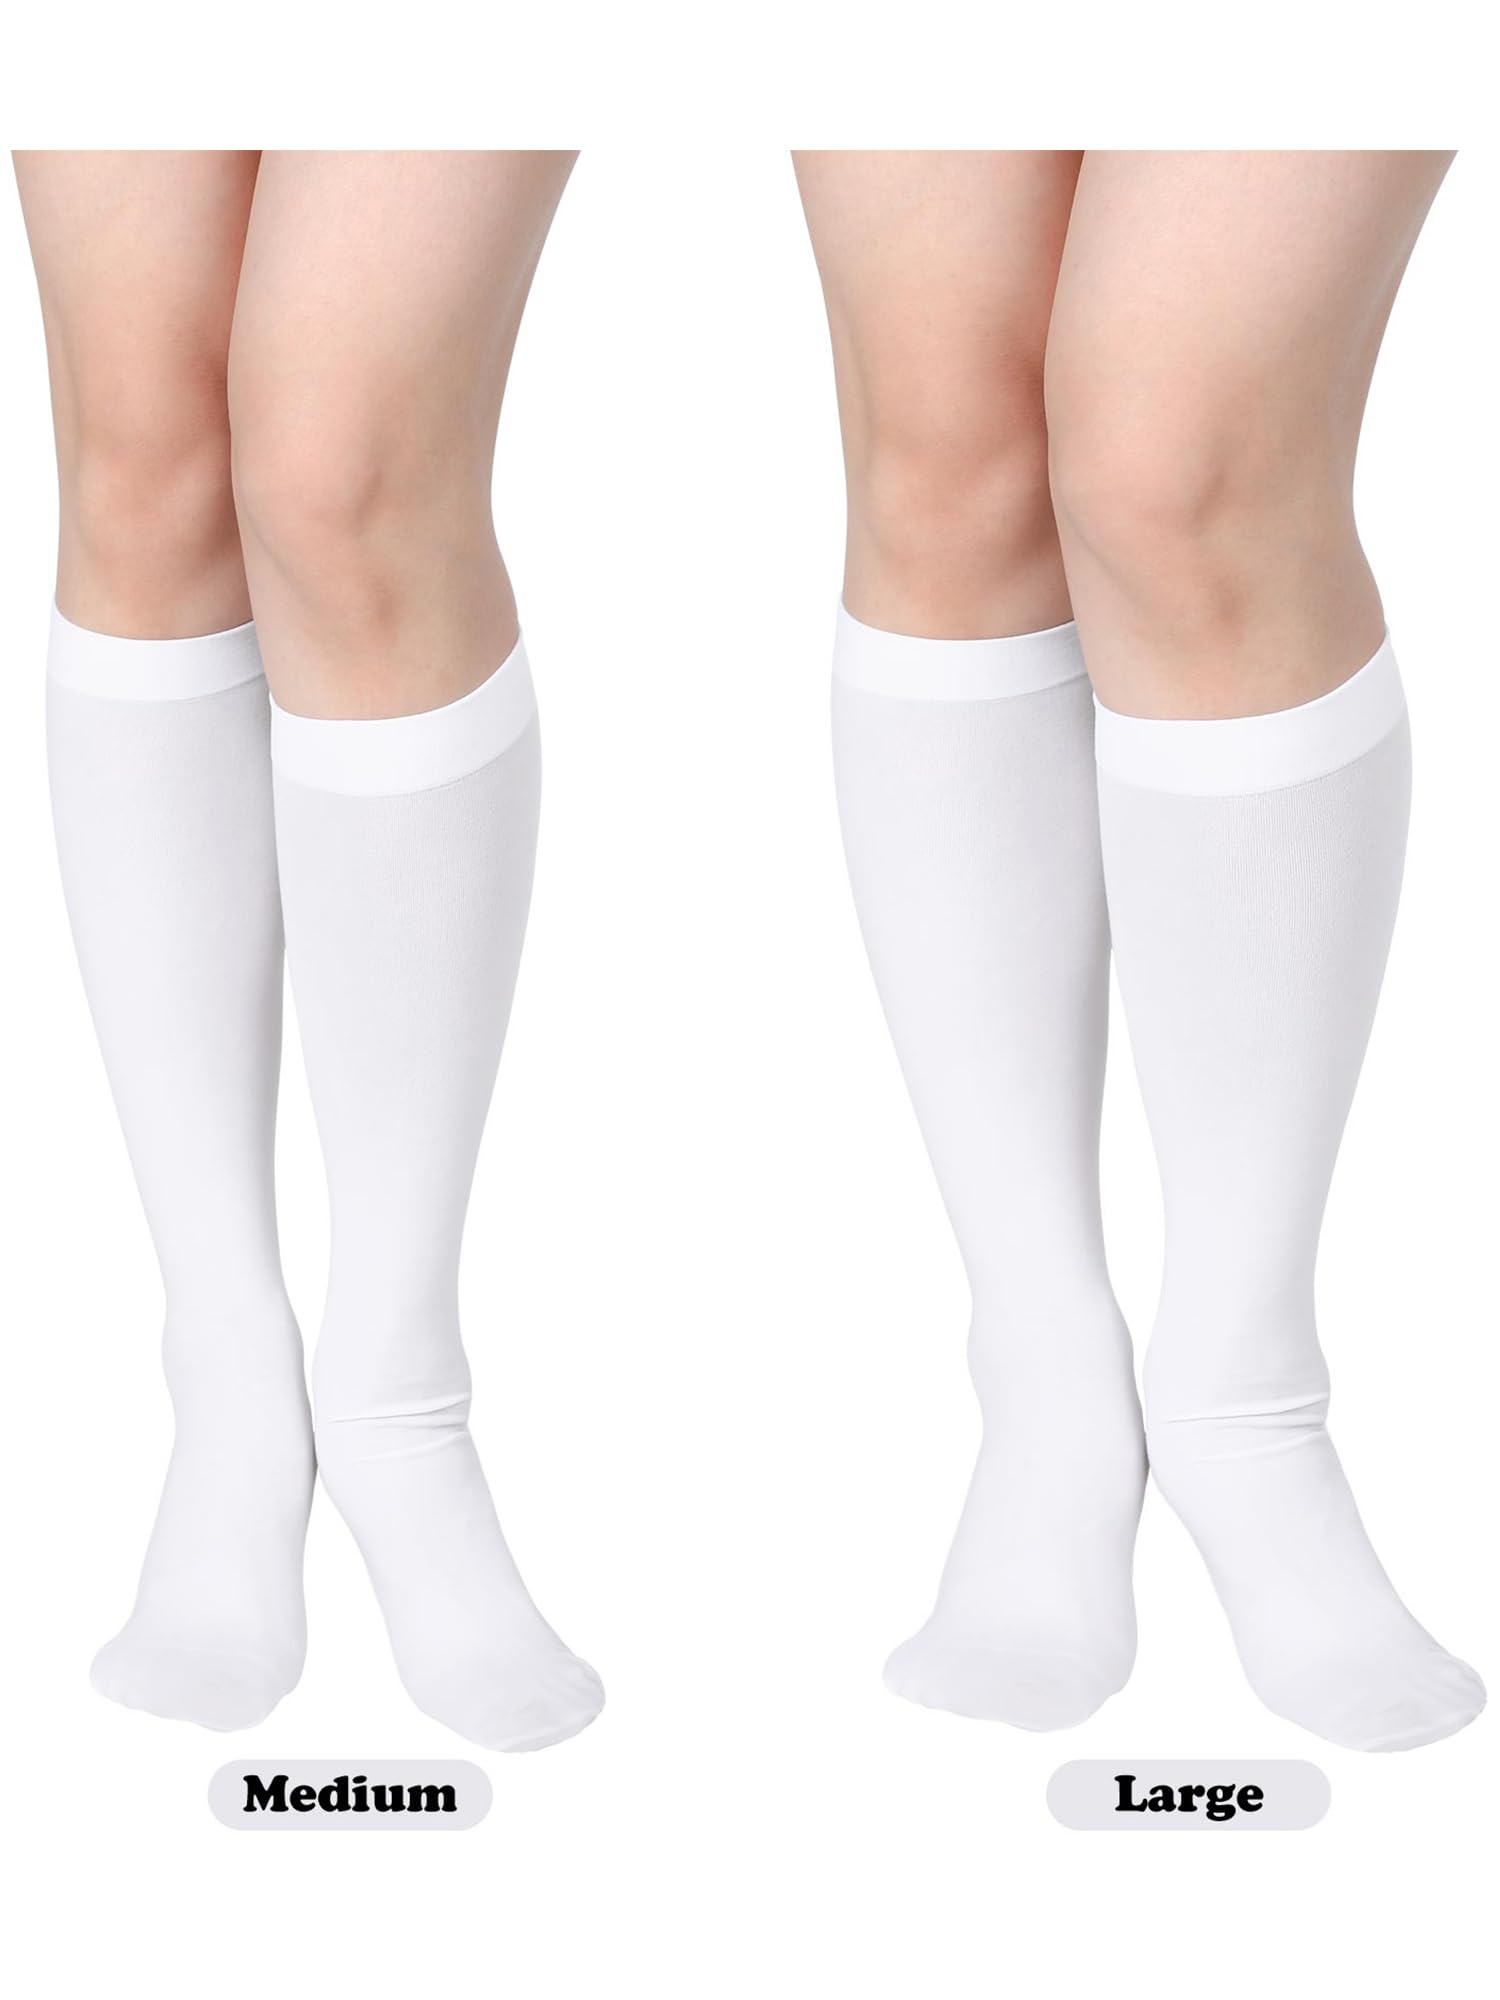 SATINIOR Women's Knee High Halloween Cosplay Stockings Socks Boots, White, Small